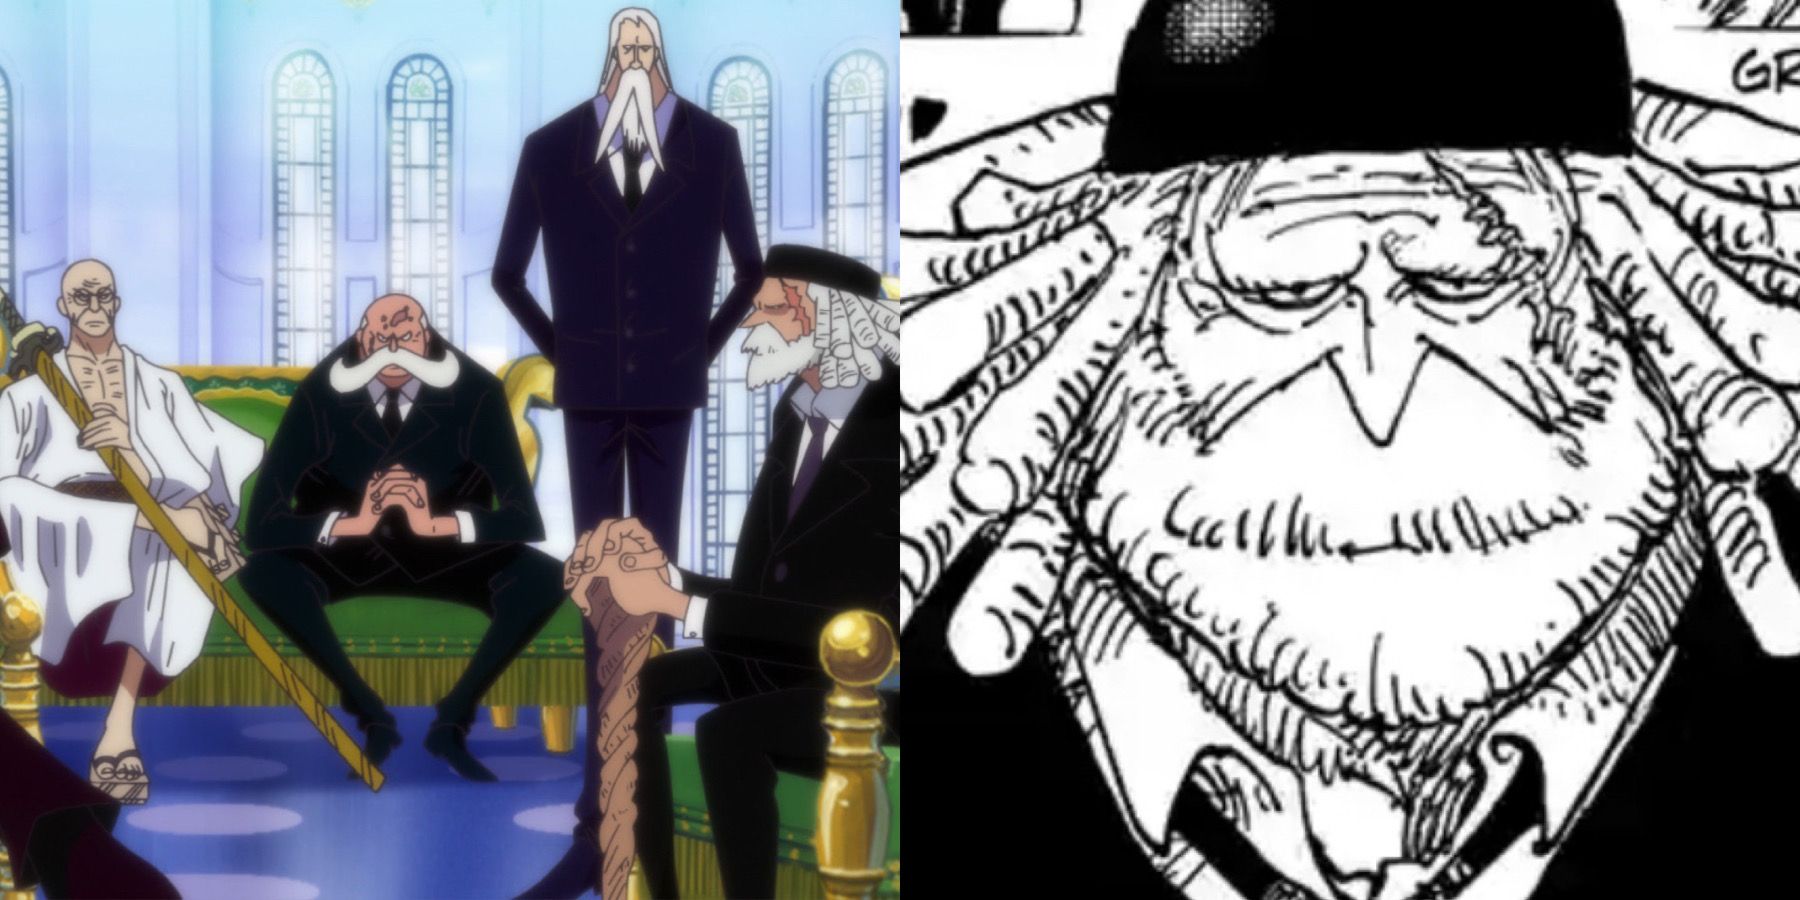 One Piece: Are The Gorosei Fighters?